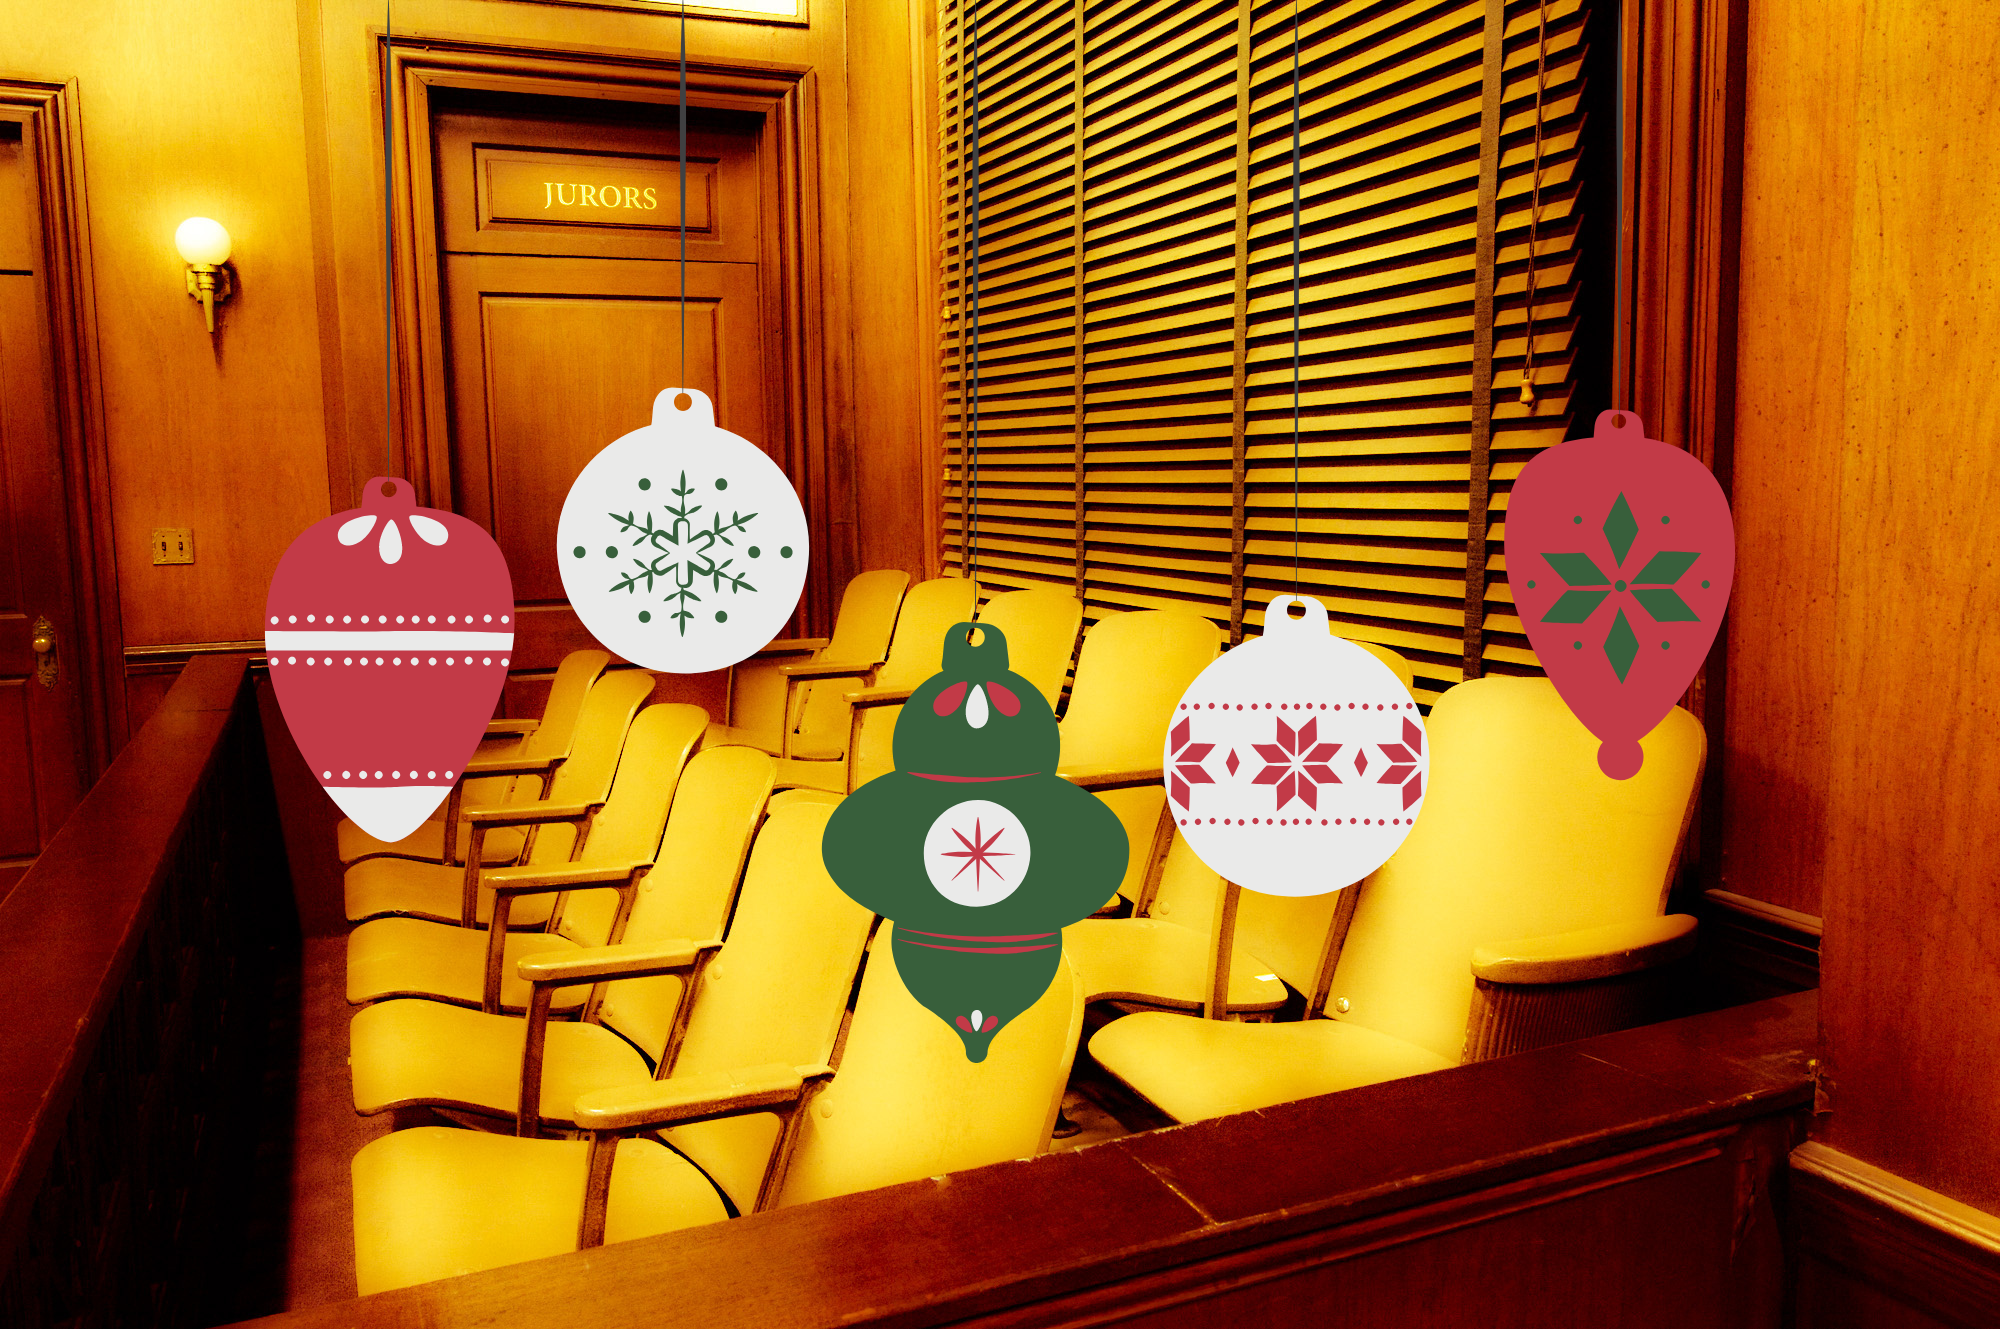 Jury Box with Christmas Tree Balls